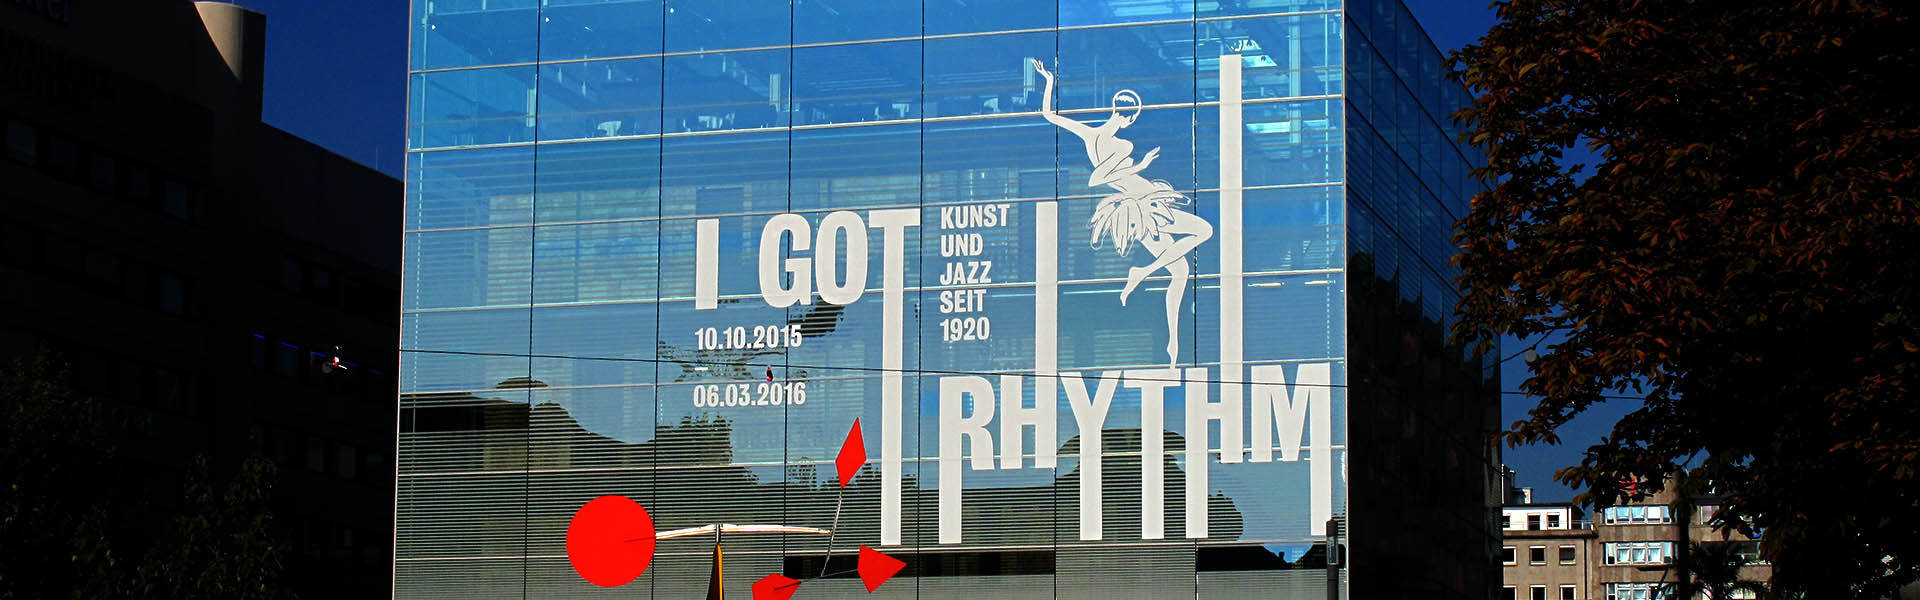 Folienschnitt: Beschriftung der Fassade des Kunstmuseum Stuttgart für die Ausstellung "I got rythm"